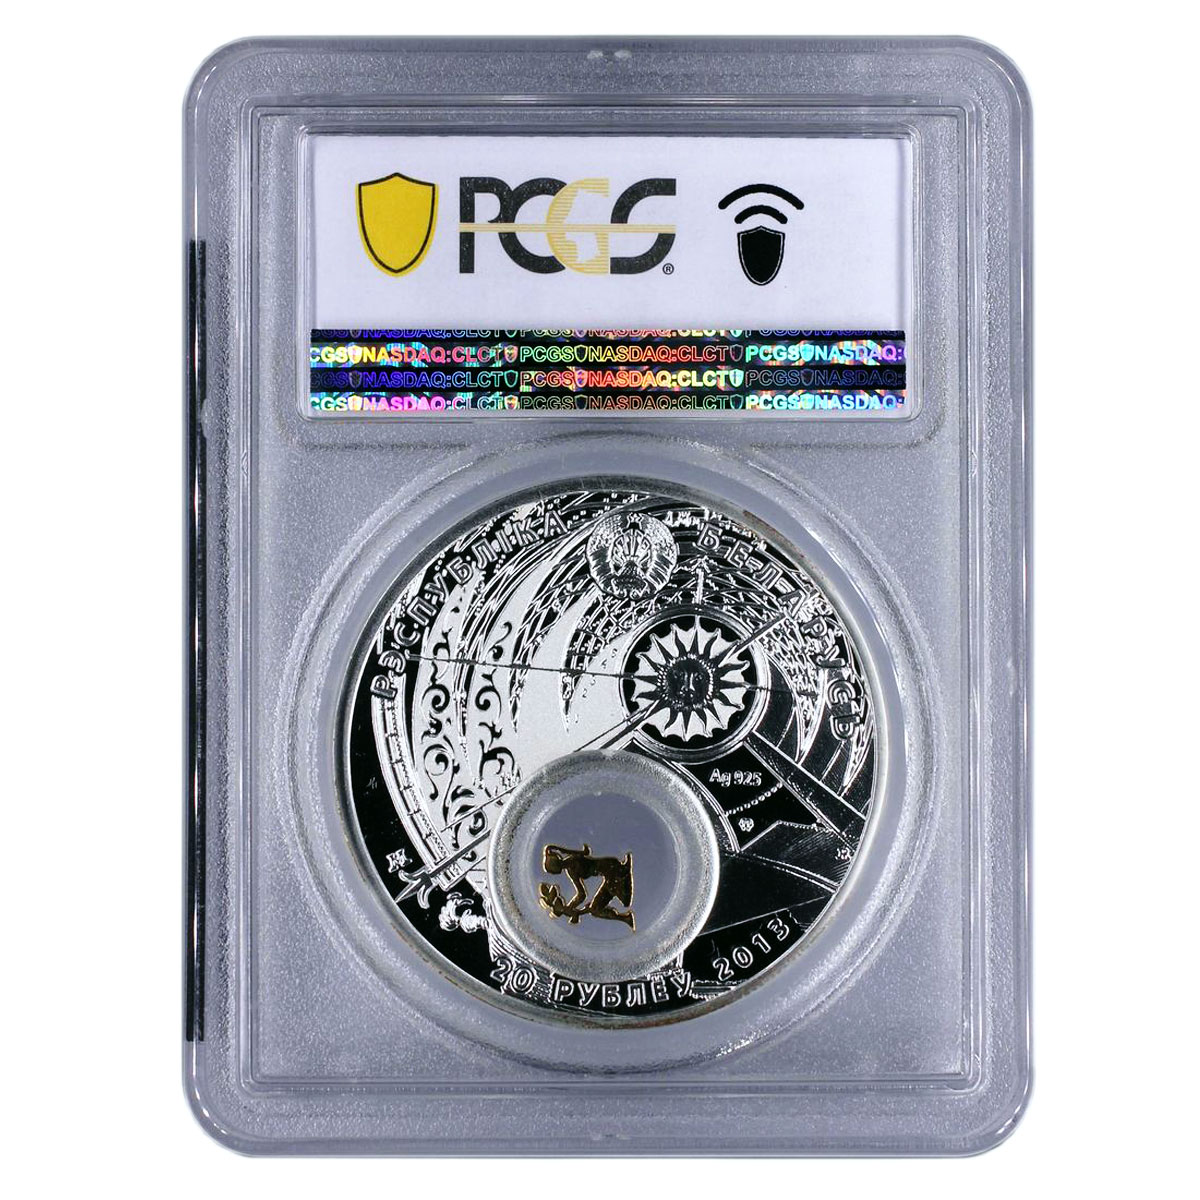 Belarus 20 rubles Zodiac Signs series Virgo PR70 PCGS gilded silver coin 2013